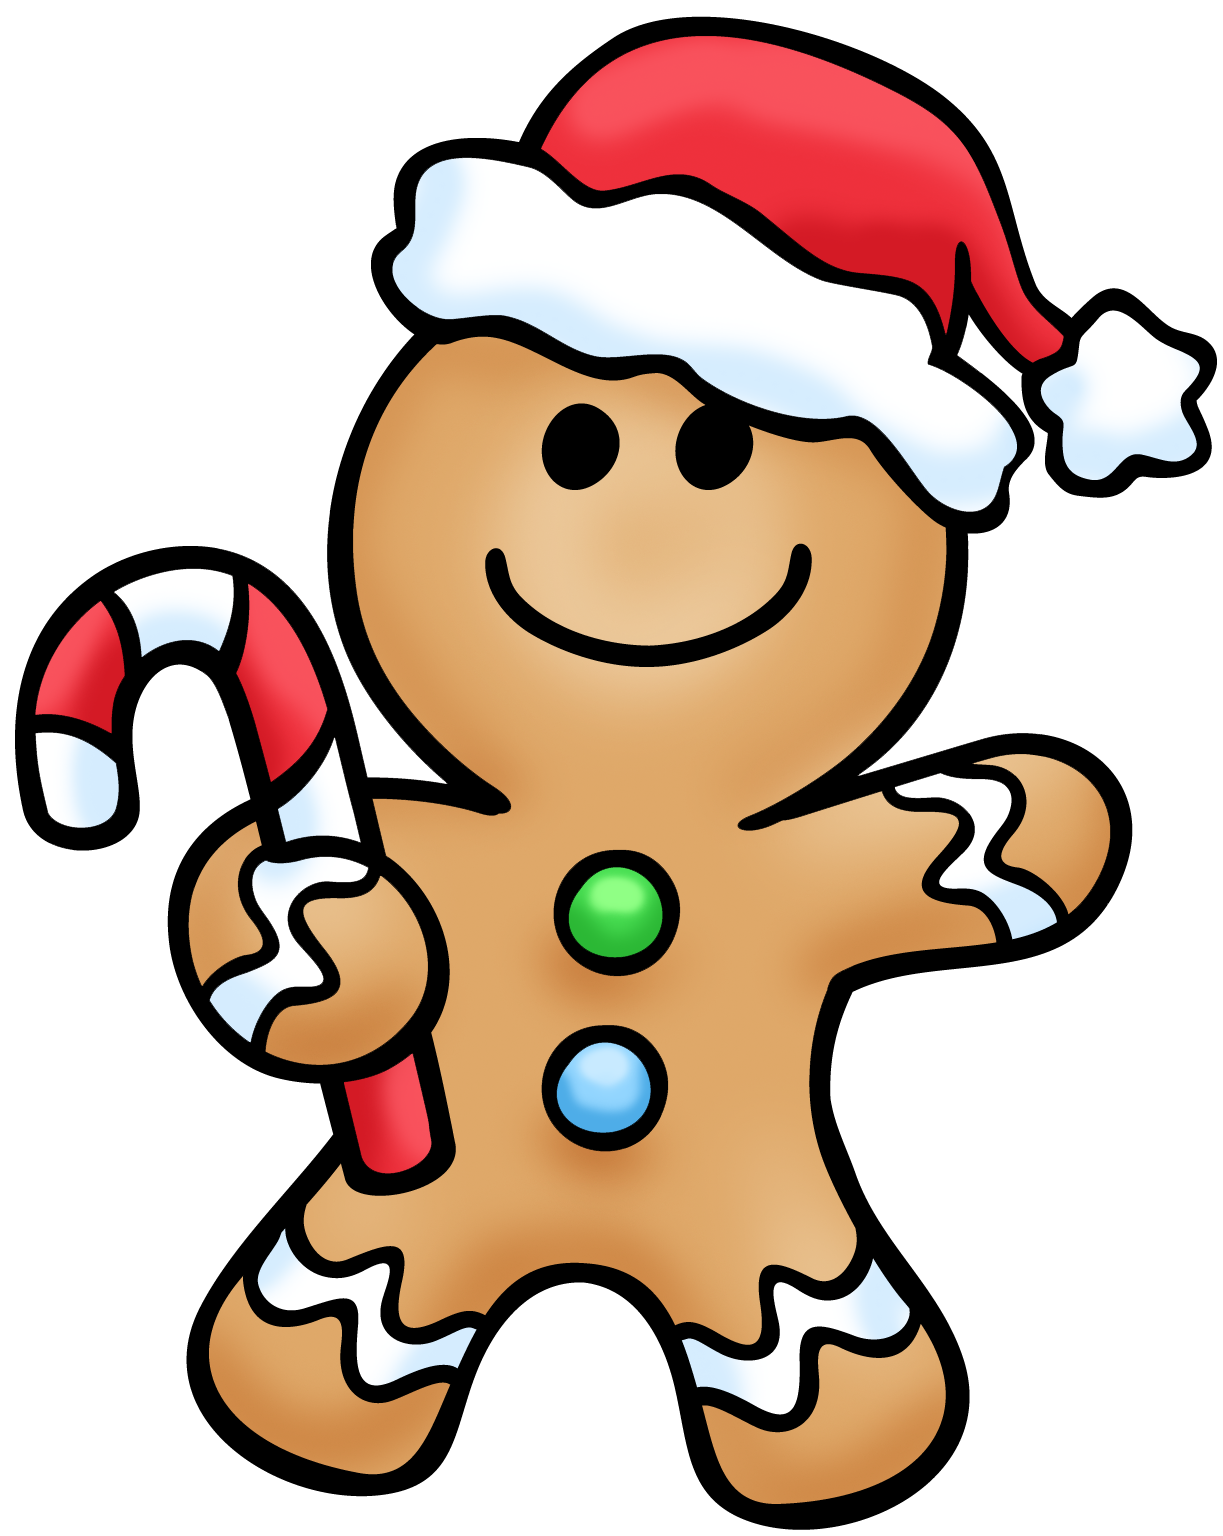 Christmas gingerbread man clip art clip art gingerbread image Clipartix